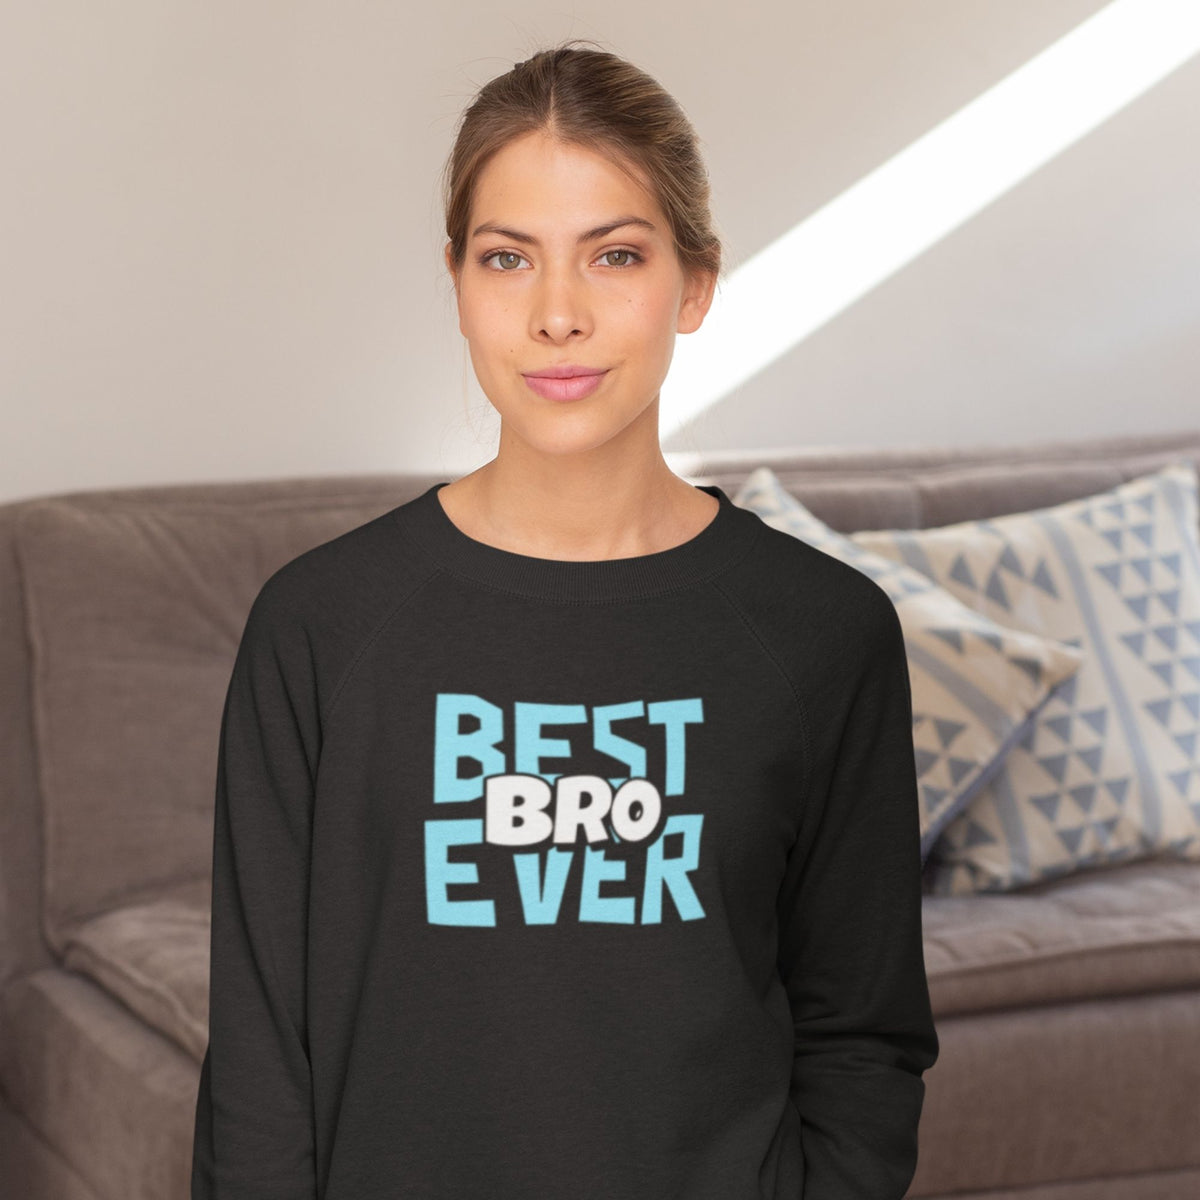 best-bro-ever-cotton-printed-unisex-black-female-model-sweatshirt-gogirgit-com